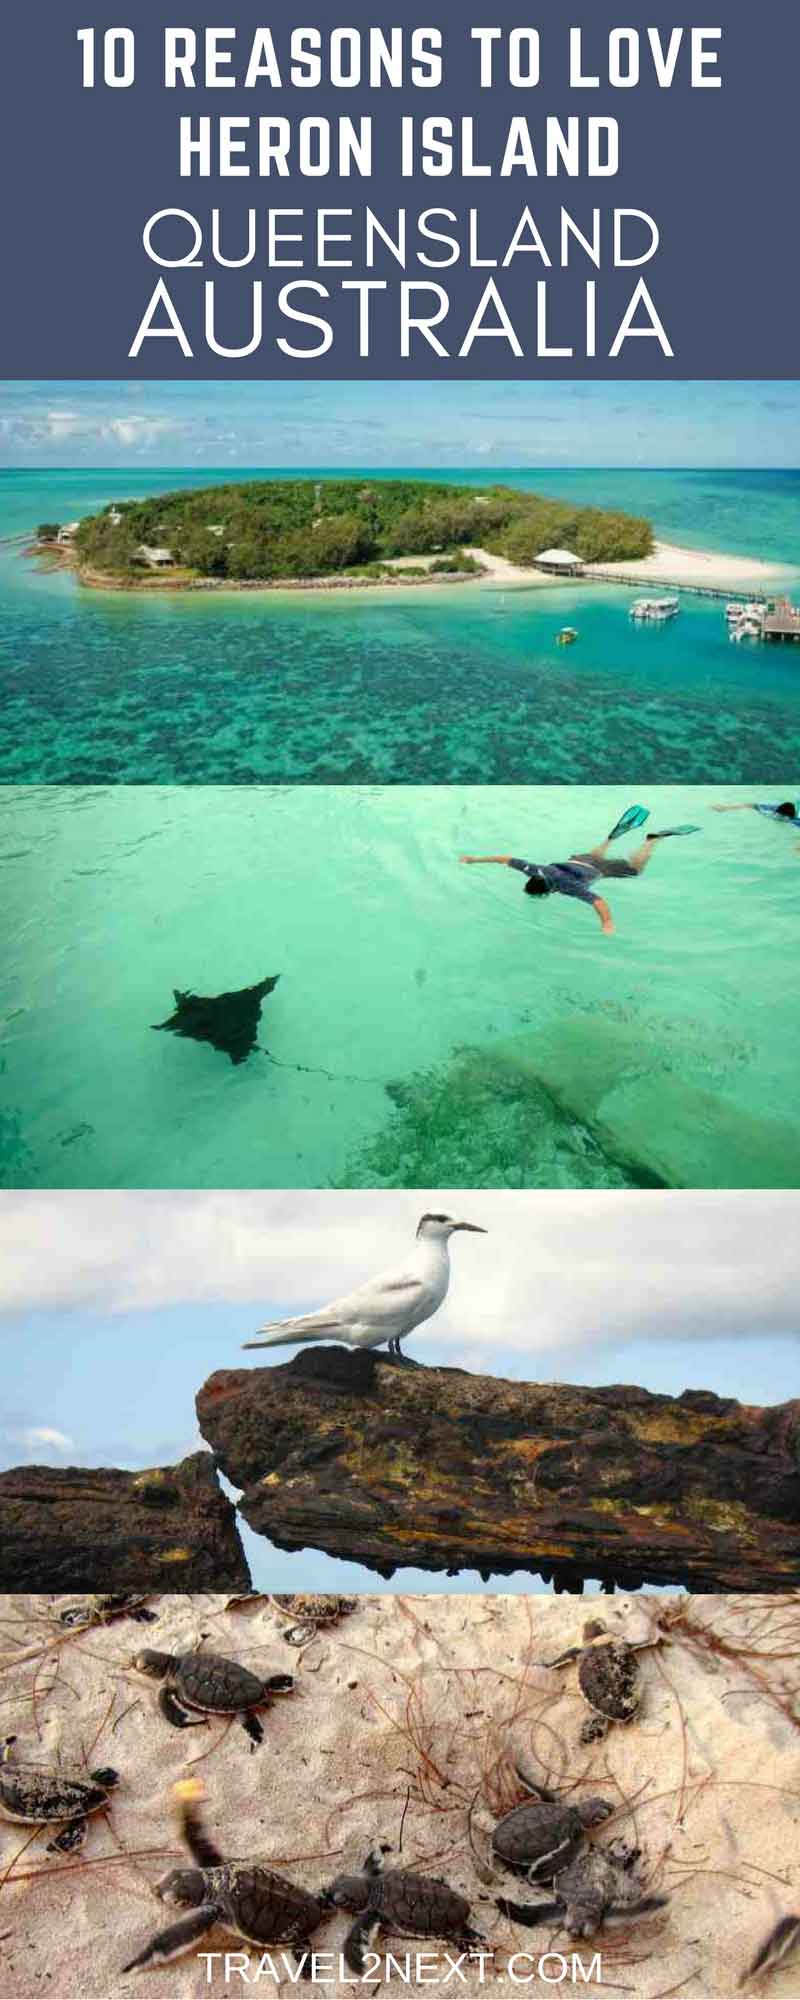 10 reasons to love Heron Island